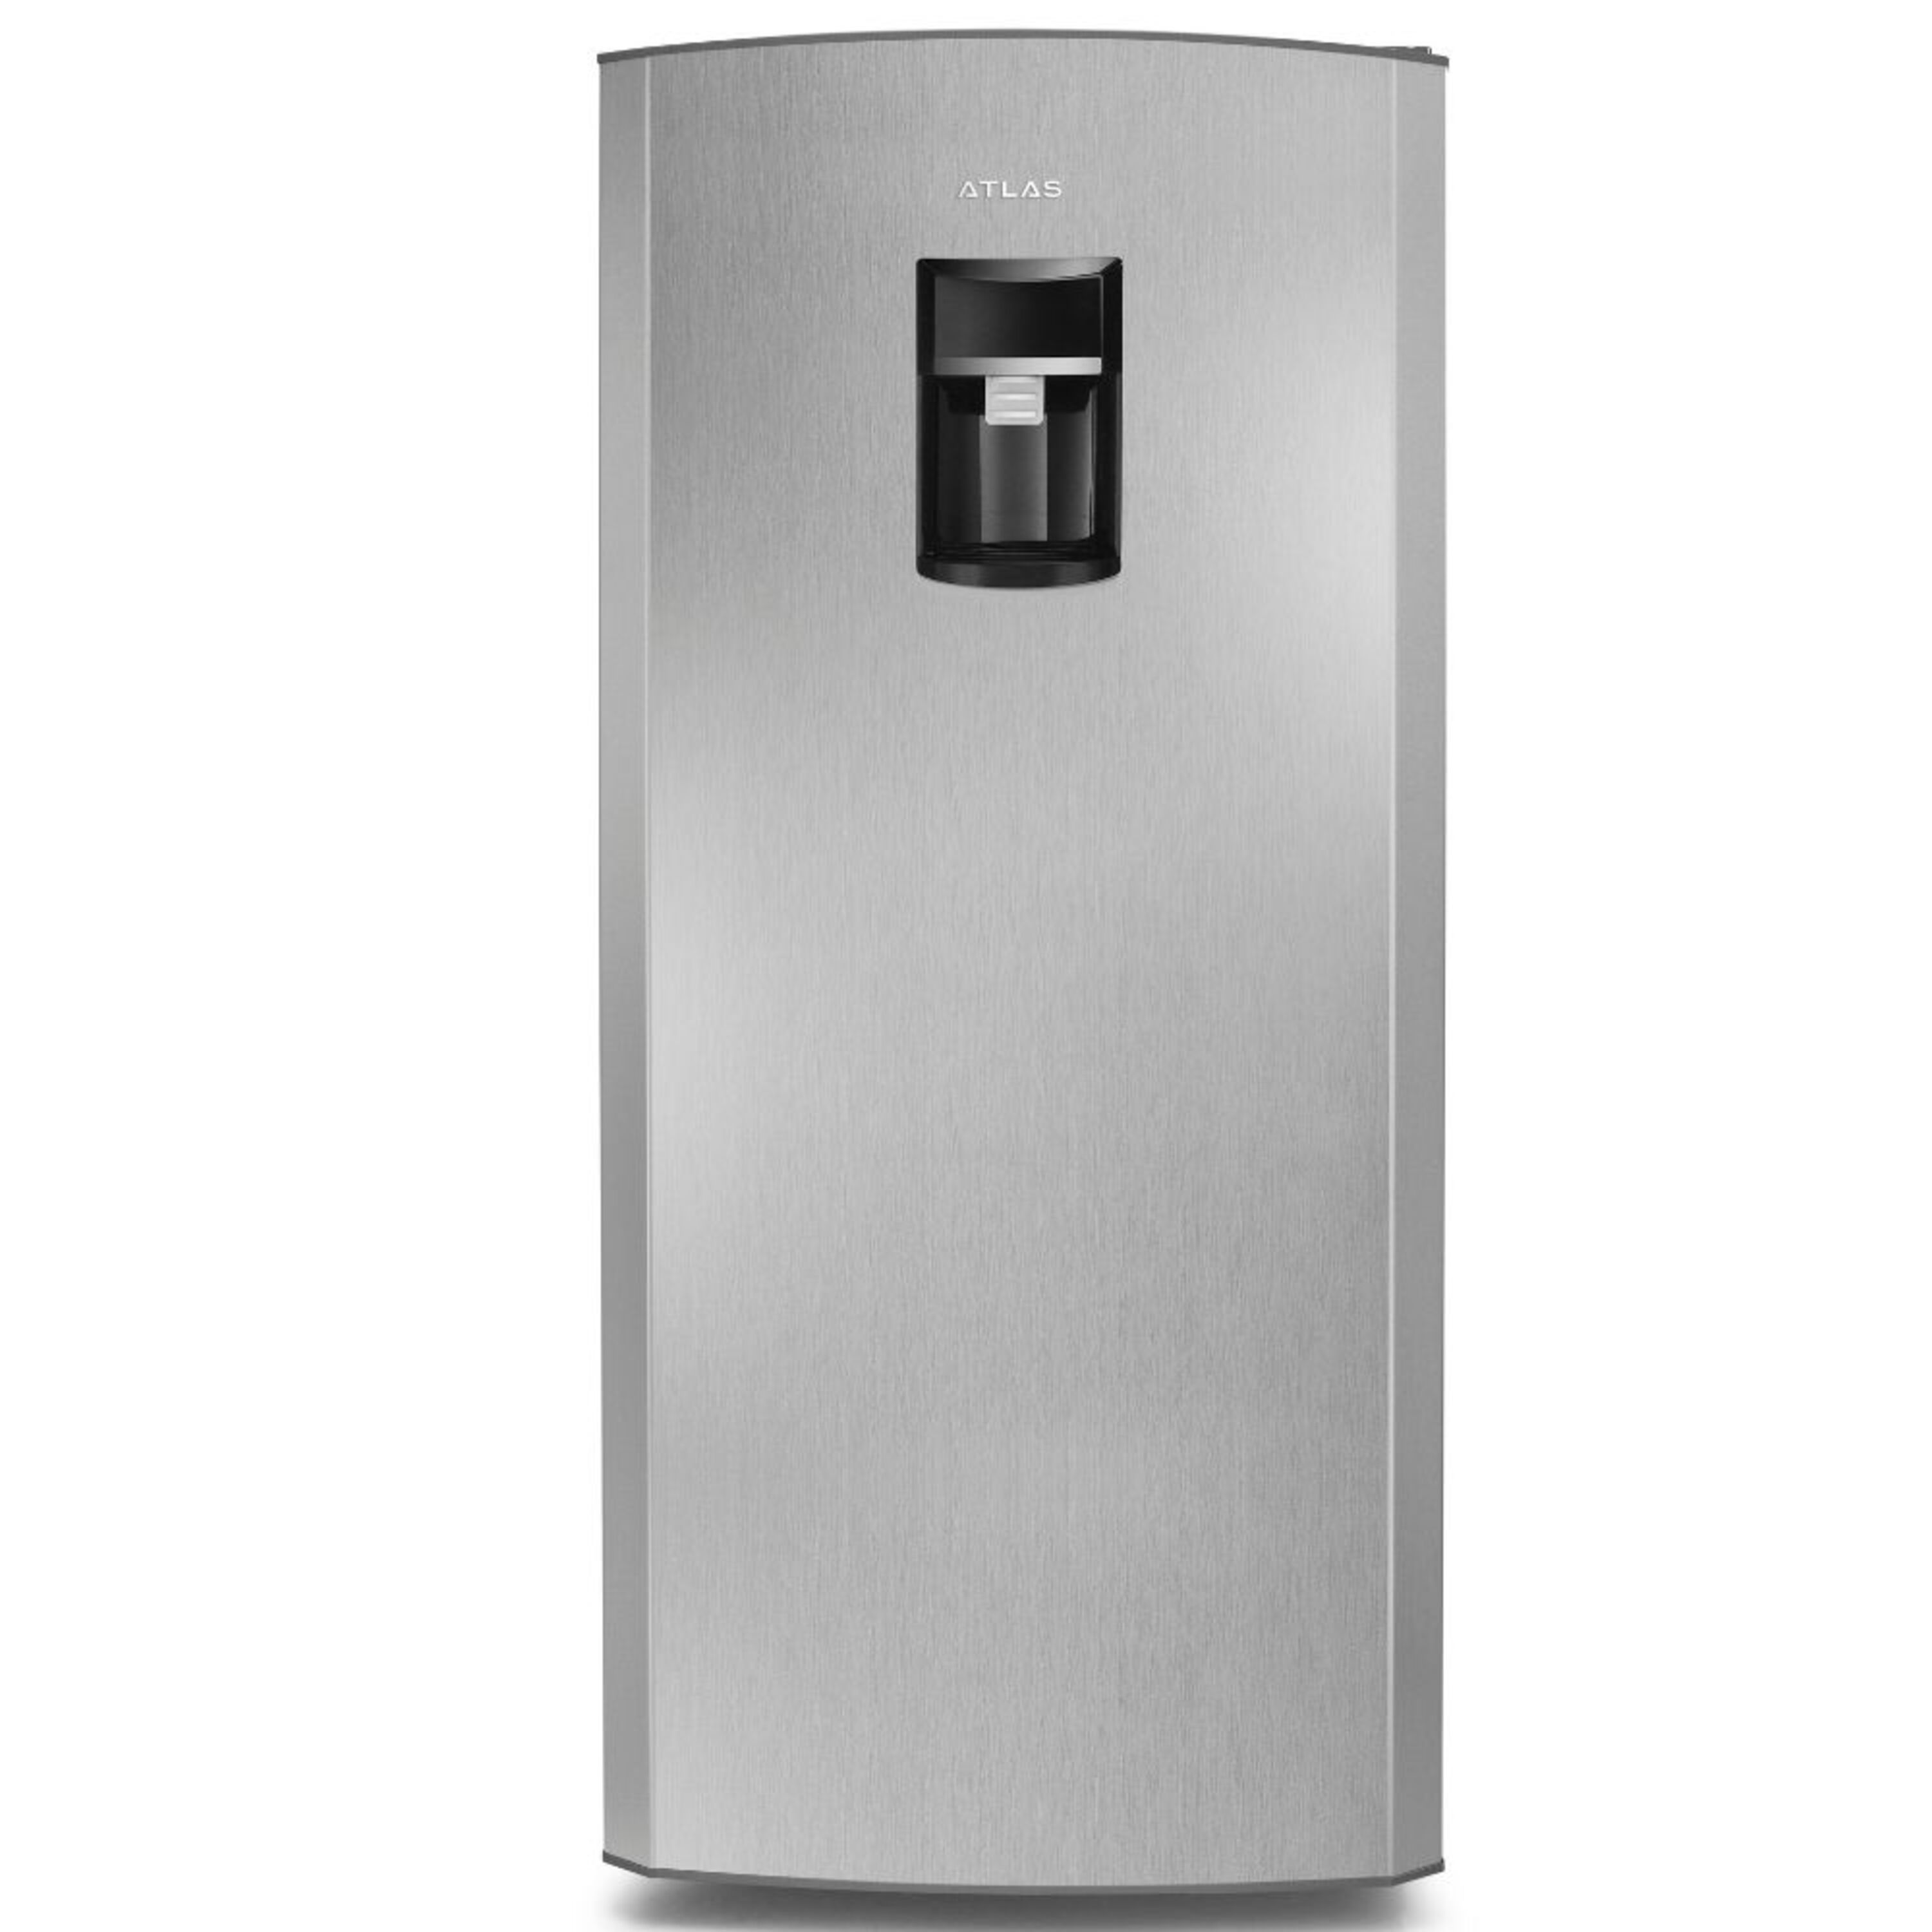 Refrigeradora-Atlas-1P-Gris-7Pc-Frost-1-68452